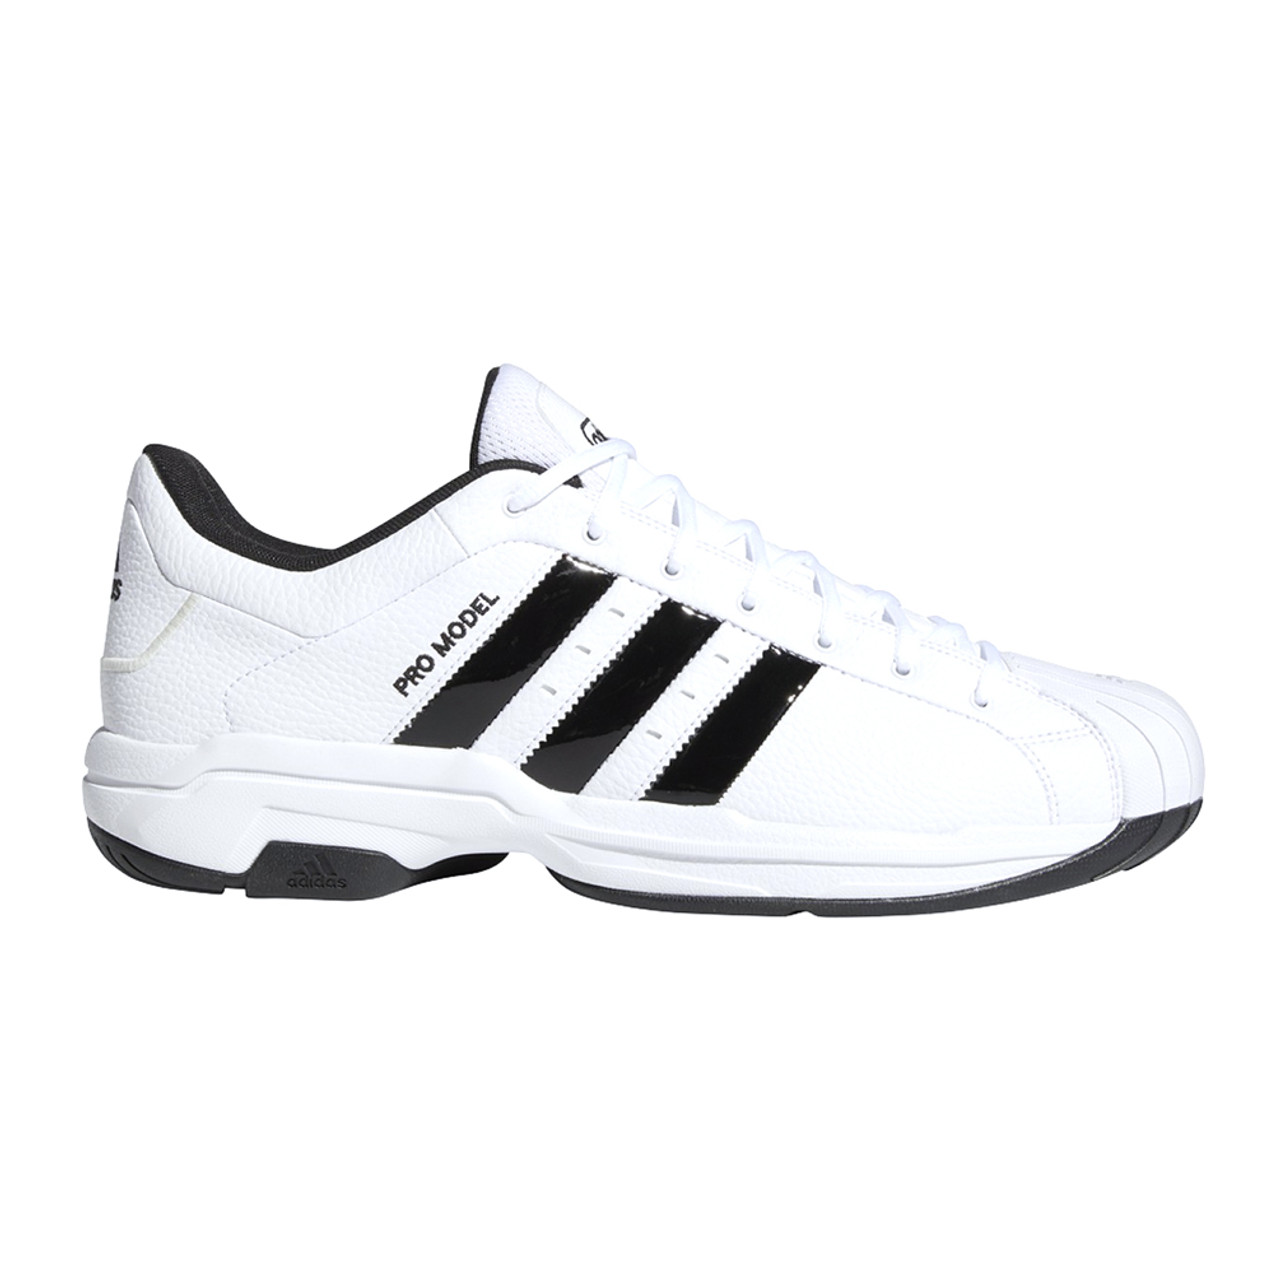 Adidas Unisex-Adult Pro Model 2G Low Basketball Shoe - White | Discount  Adidas Unisex Athletic Shoes & More  